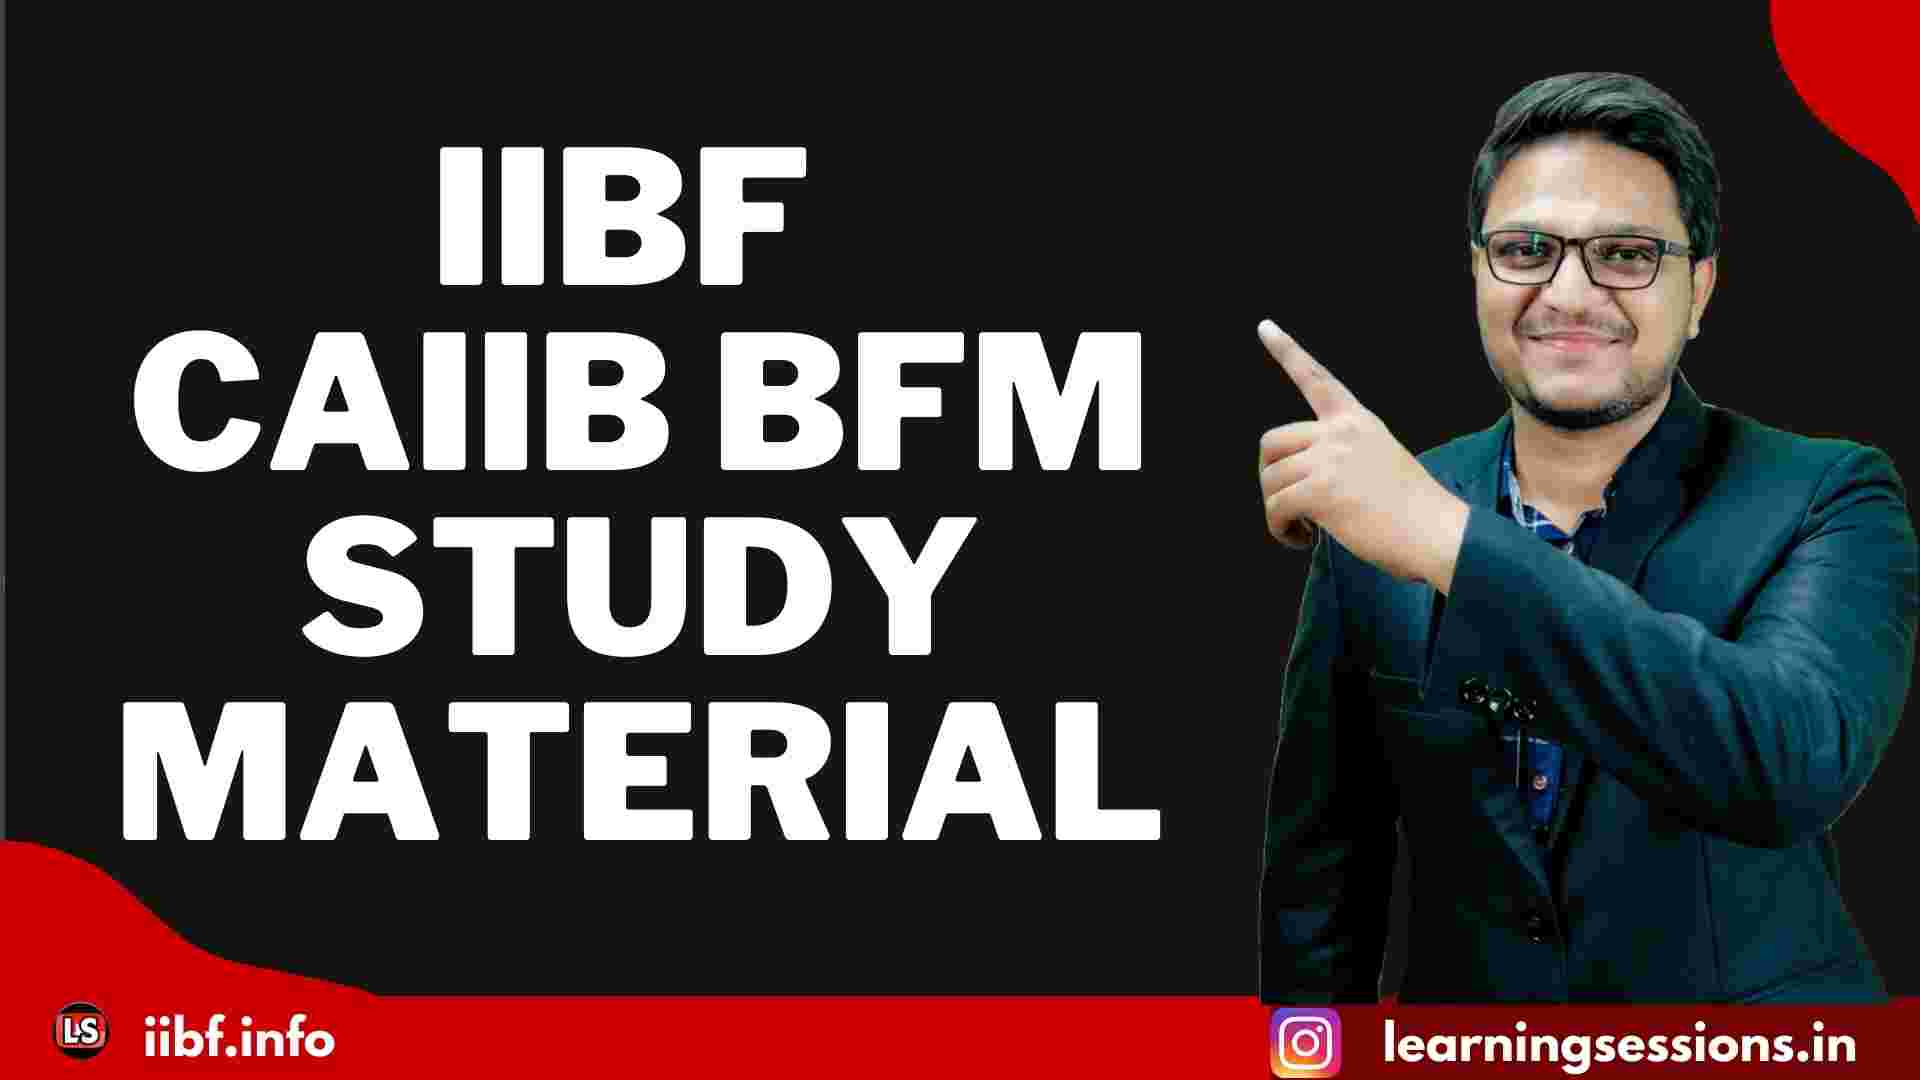 IIBF CAIIB BFM STUDY MATERIAL 2022